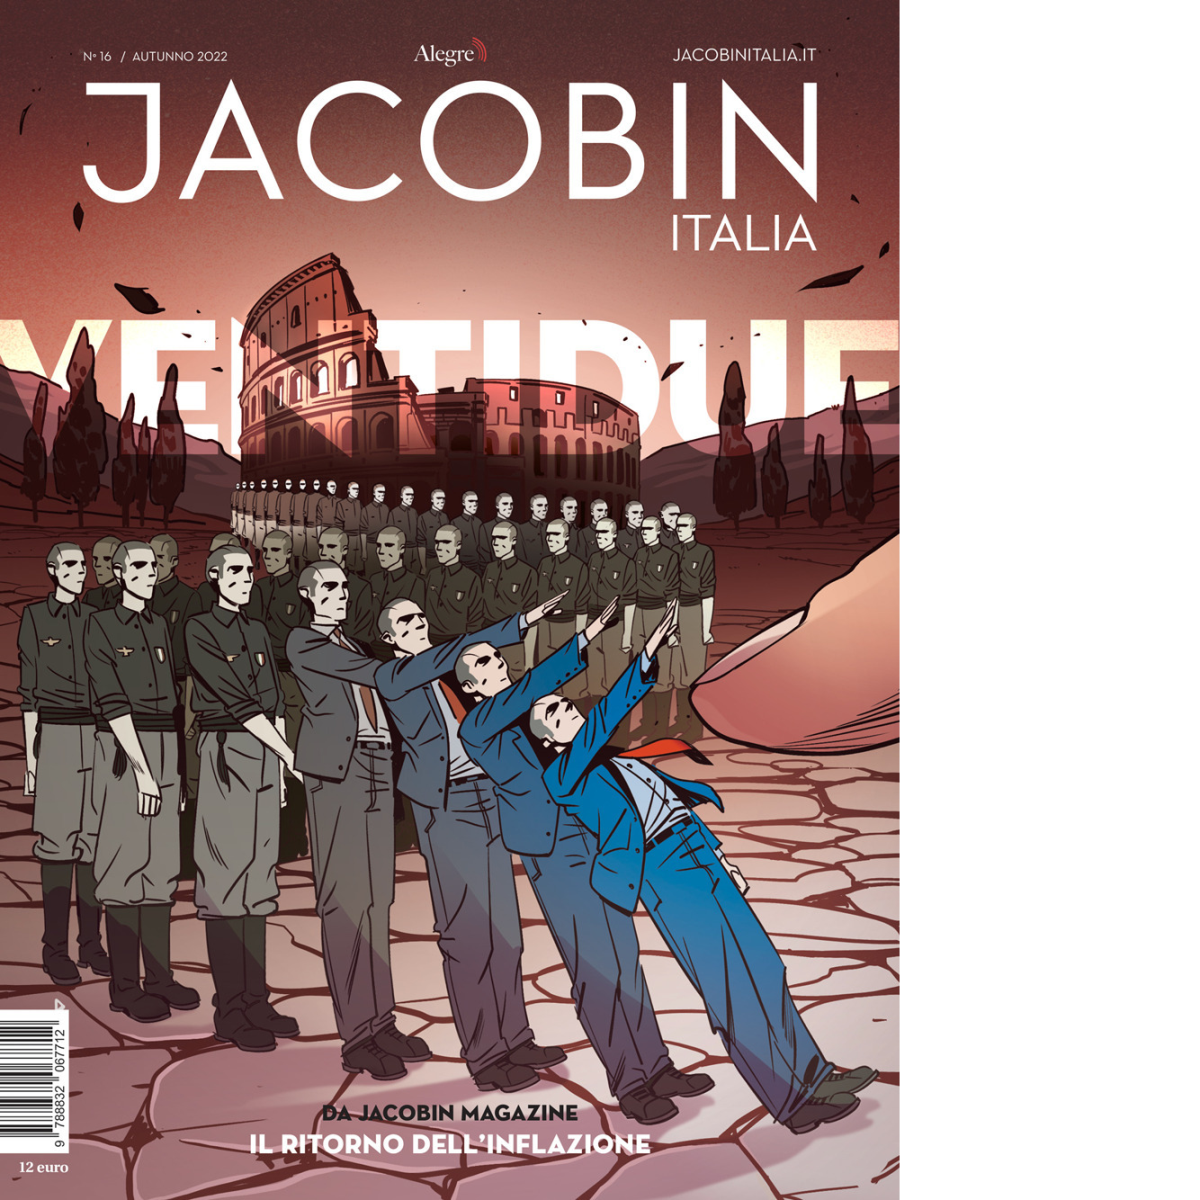 JACOBIN ITALIA n.16 - AA.VV. - Edizioni Alegre, 2022